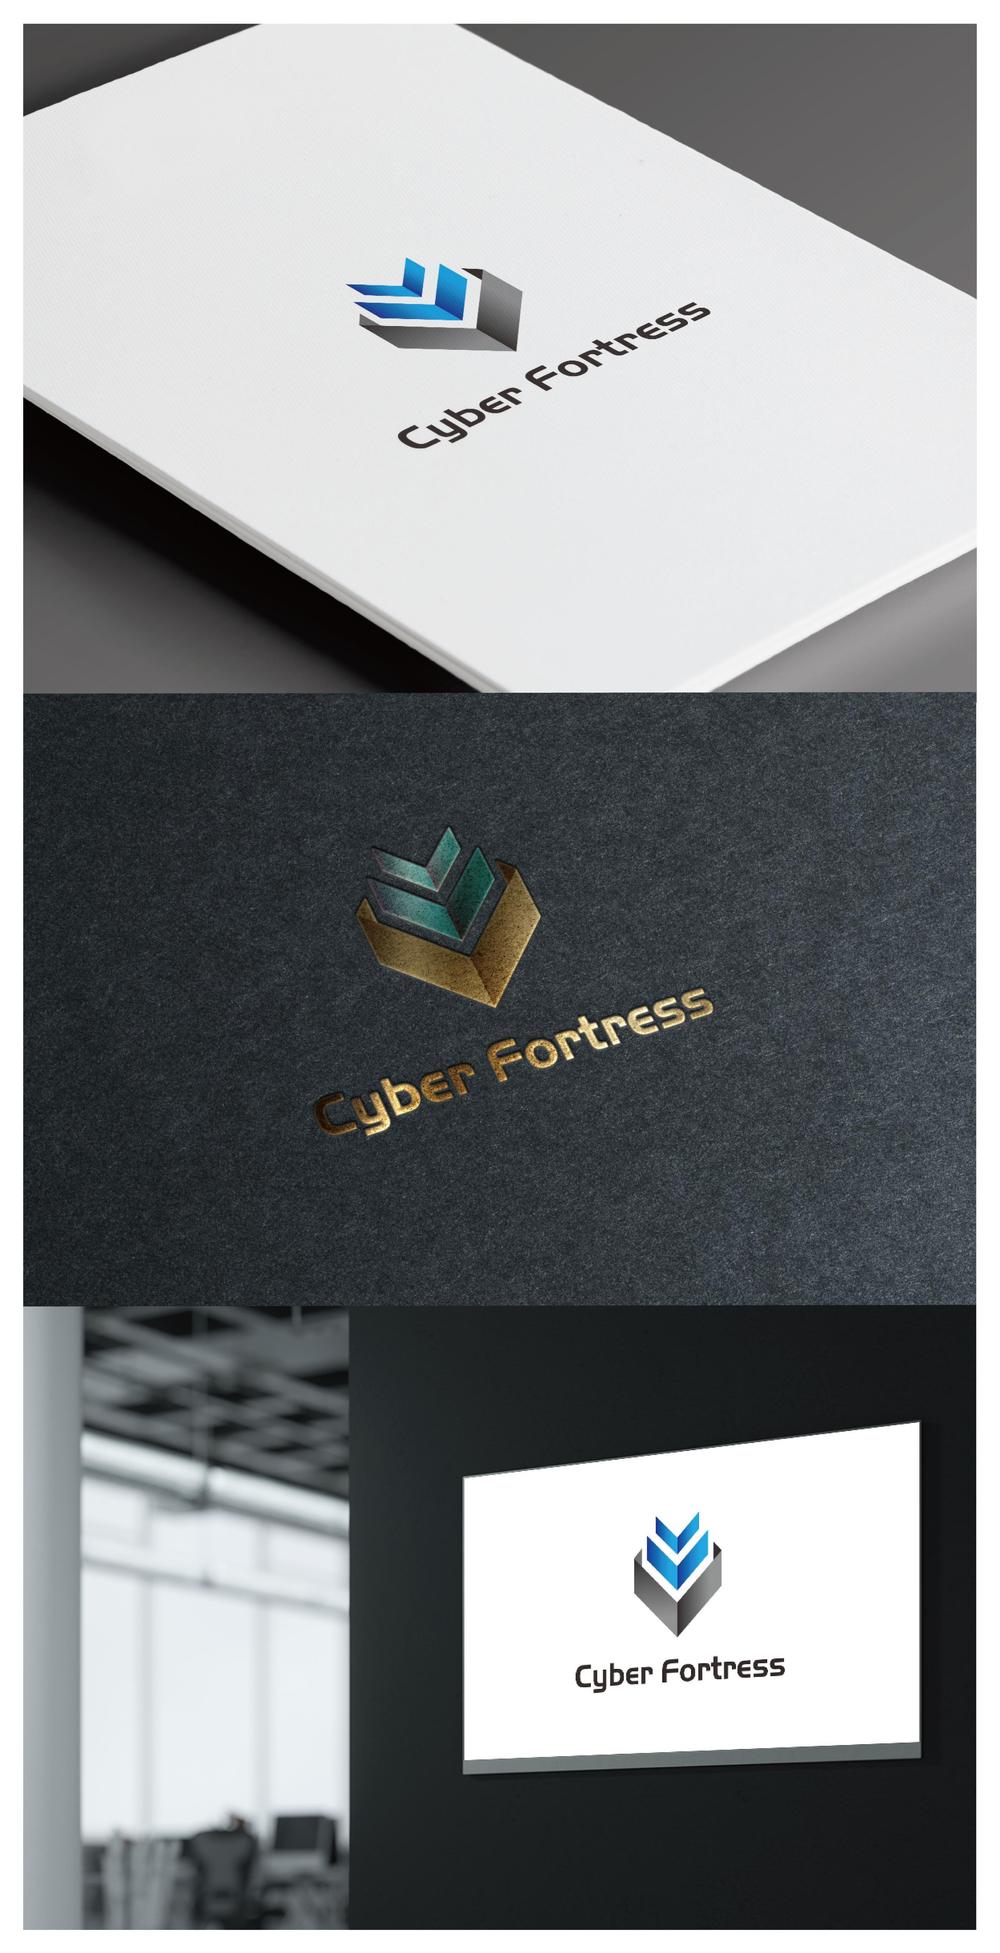 Cyber Fortress_logo03_01.jpg